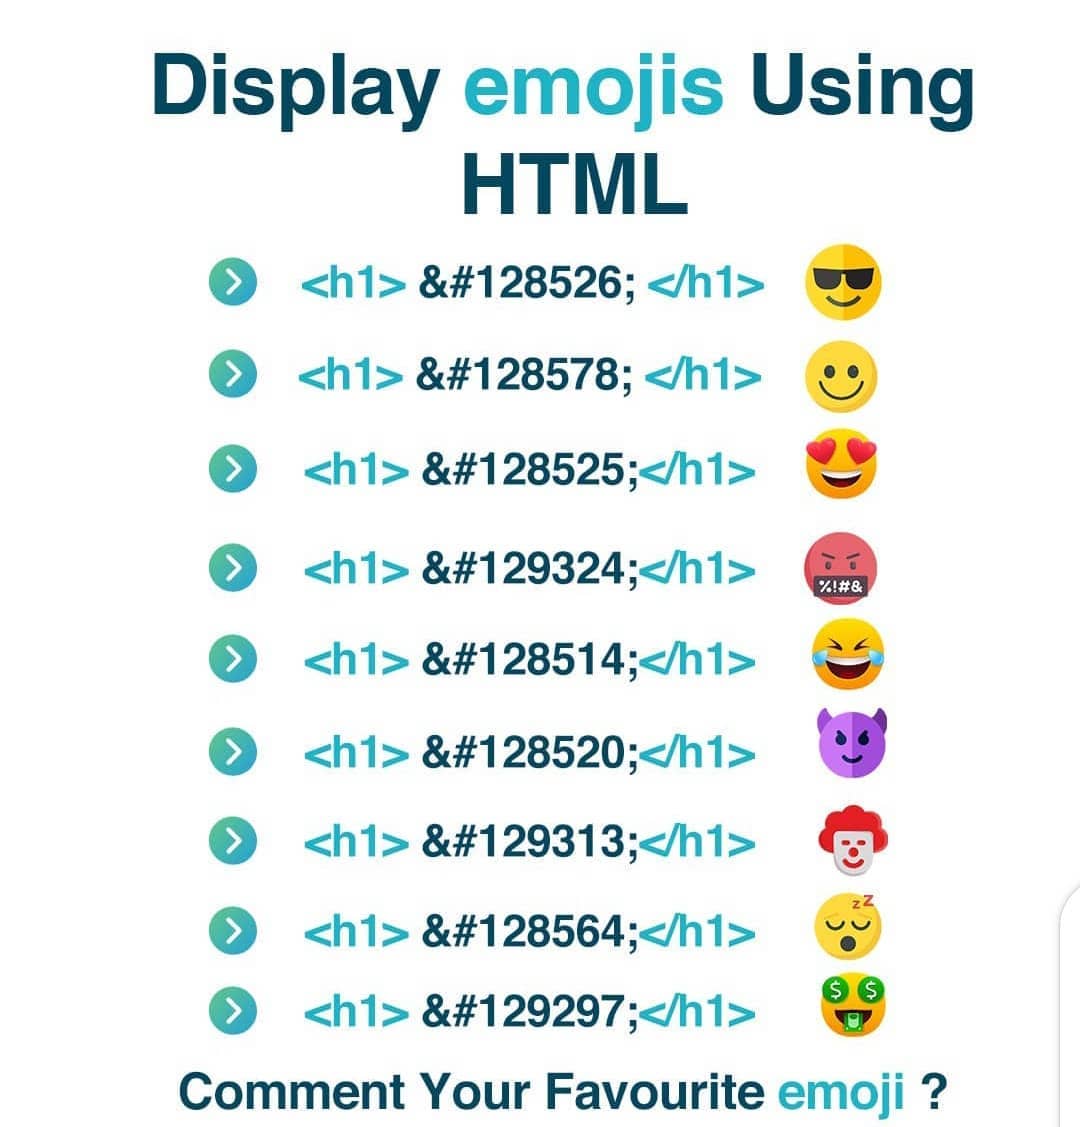 #emojichallenge #emoji #emojis #emojiparty #html #css #html5 #htmlcoding #webdevelopment24x7 #webdevelopment #webdeveloper #javascript #htmlcoding #htmlcode:#Repost
///#webdevelopment24x7: #csstudents #frontenddev #frontenddeveloper #reactjs #angularjs #tech #coder #code